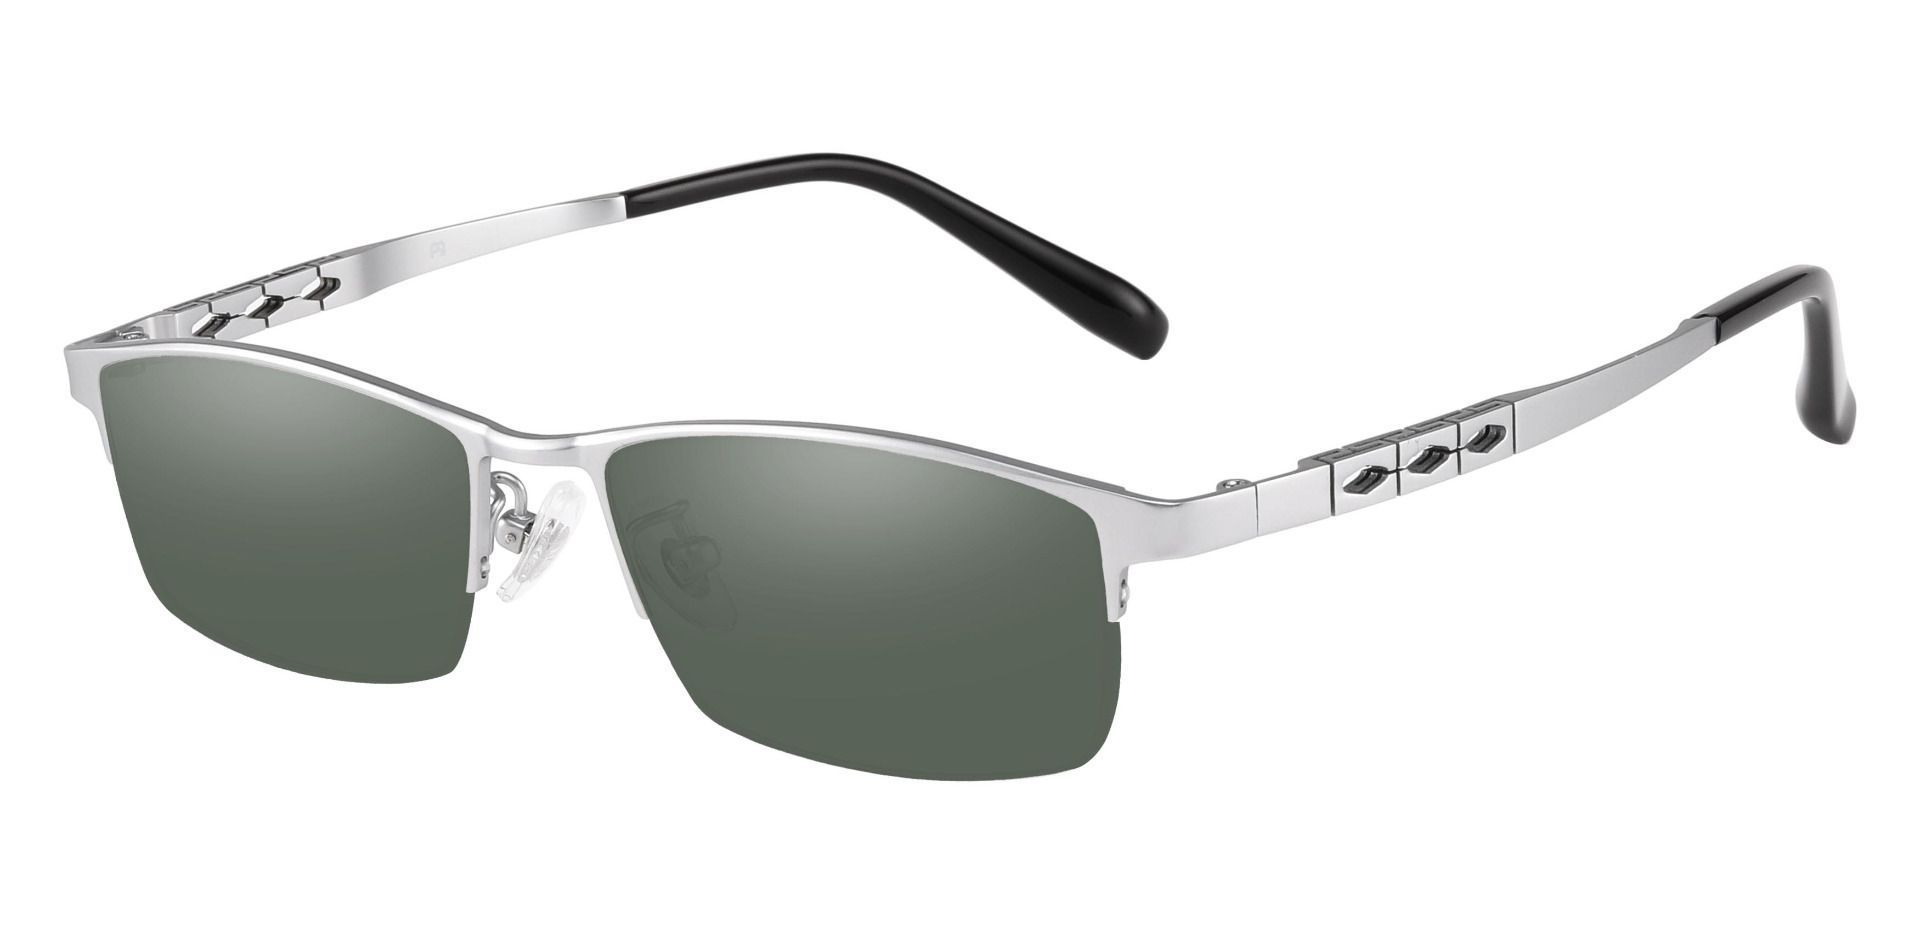 Burlington Rectangle Progressive Sunglasses - Silver Frame With Green Lenses